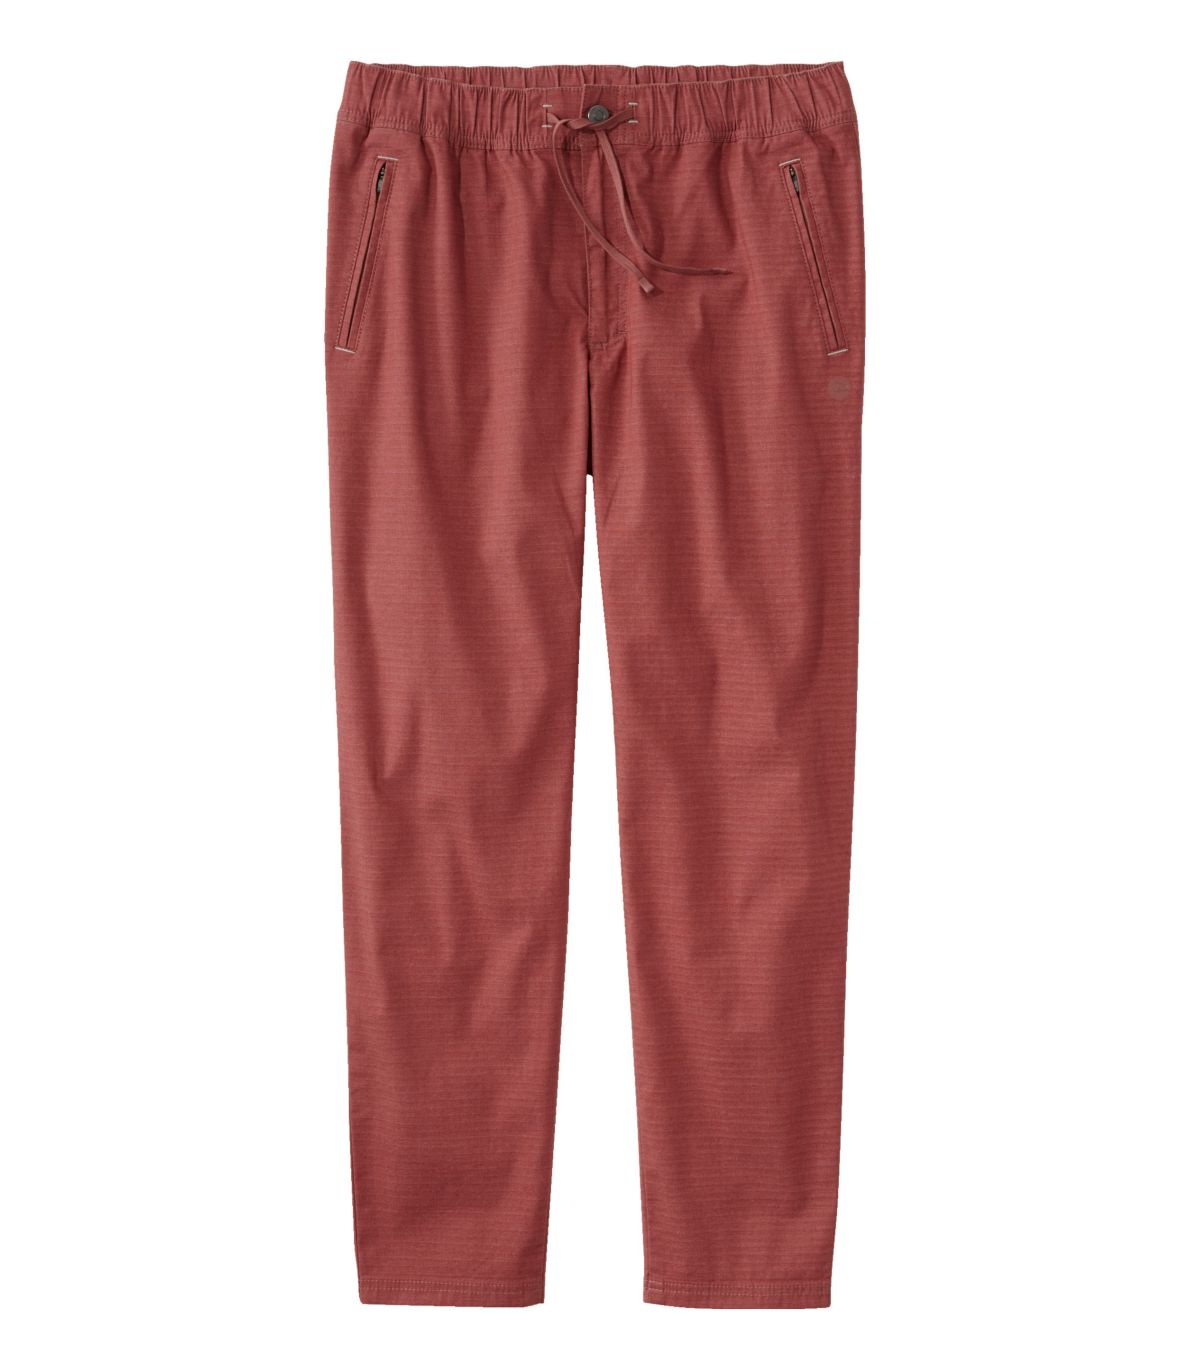 Men's Explorer Ripstop Pants, Standard Fit, Comfort Waist, Tapered Leg